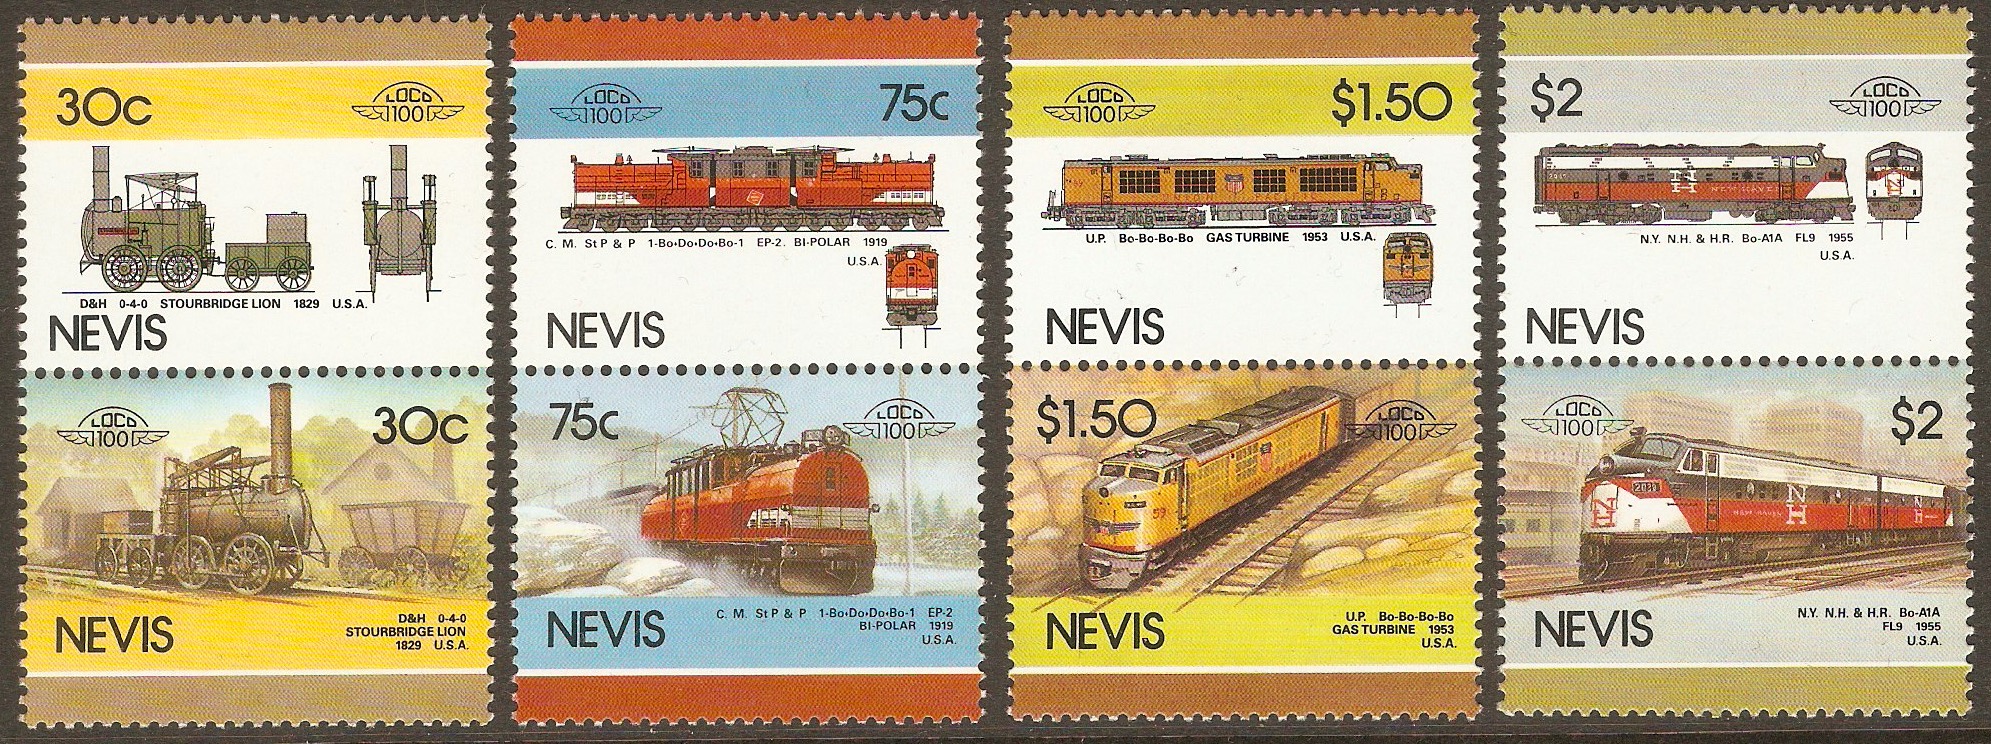 Nevis 1986 Railway Locomotives set (5th. Series). SG352-SG359.